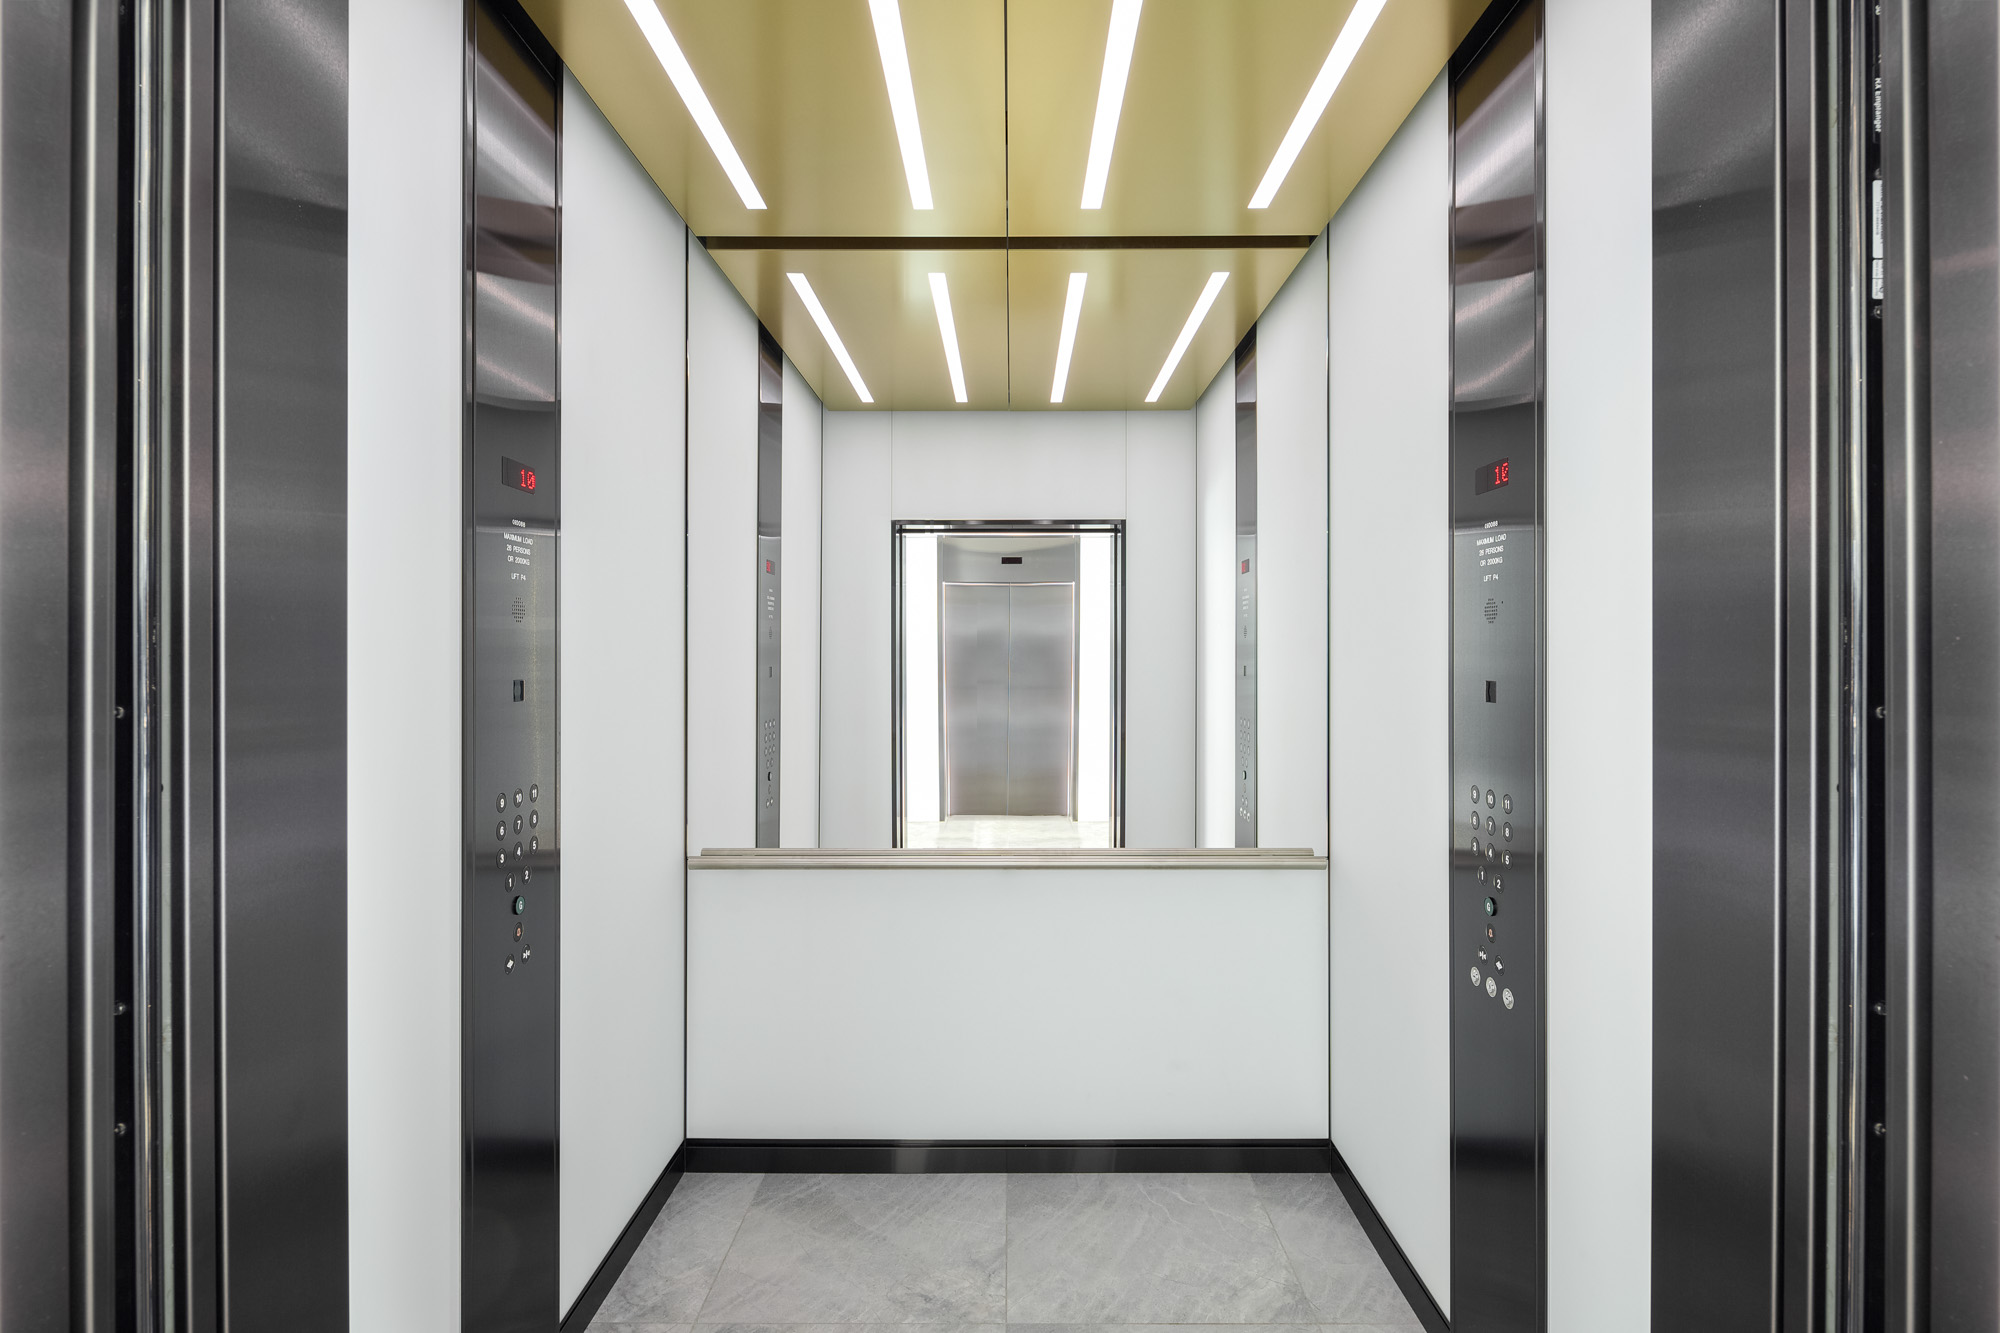 Lift interior photograph